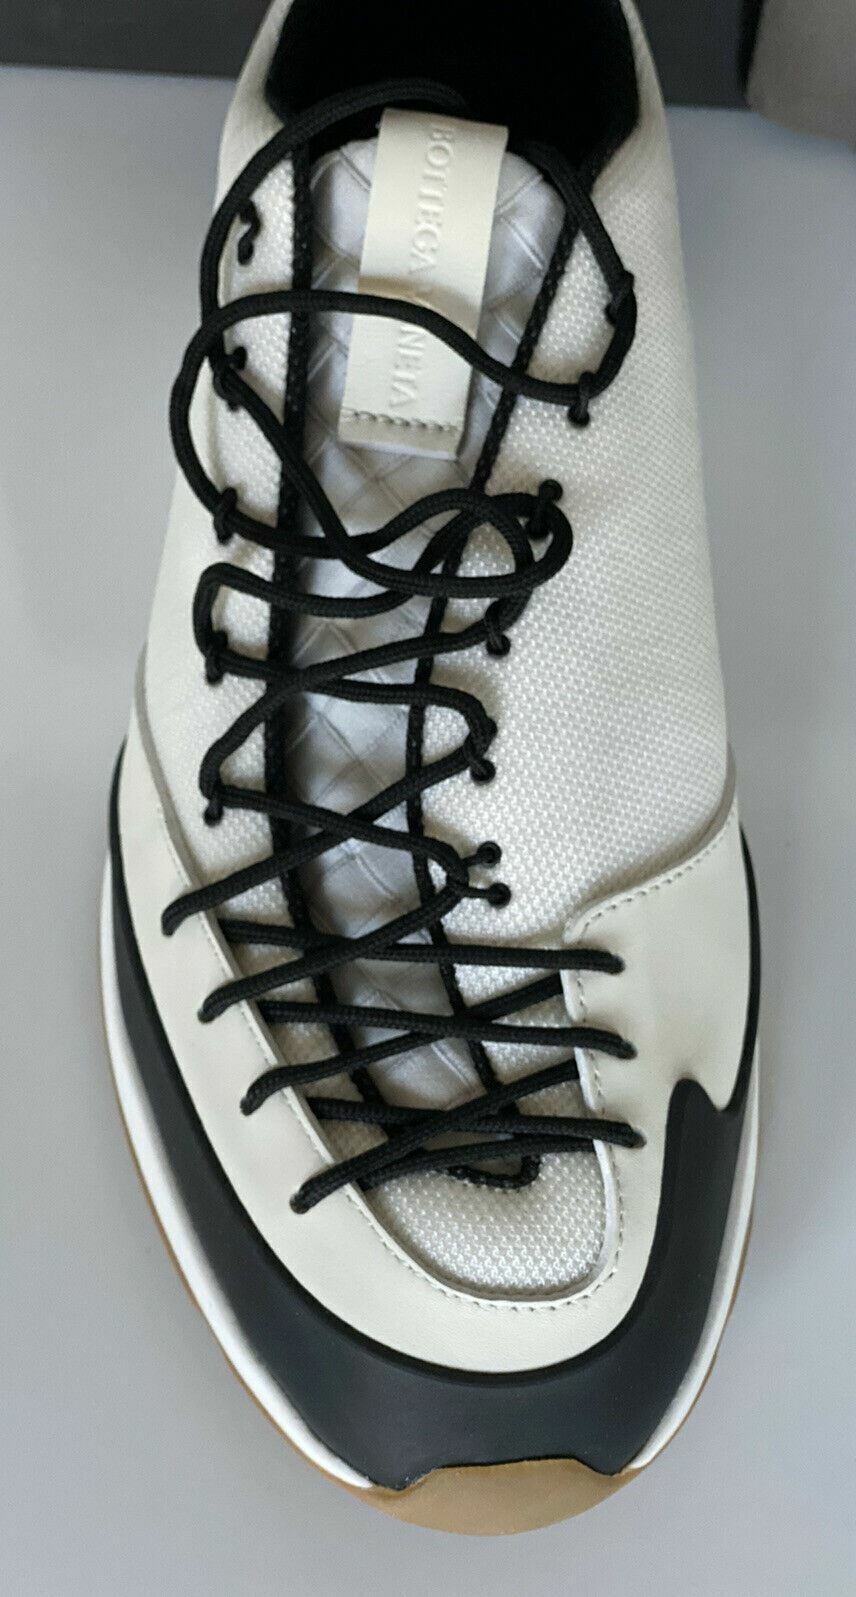 СПИ $790 Мужские белые кроссовки Scar Tex Bottega Veneta 12 США (45 евро) 609891 